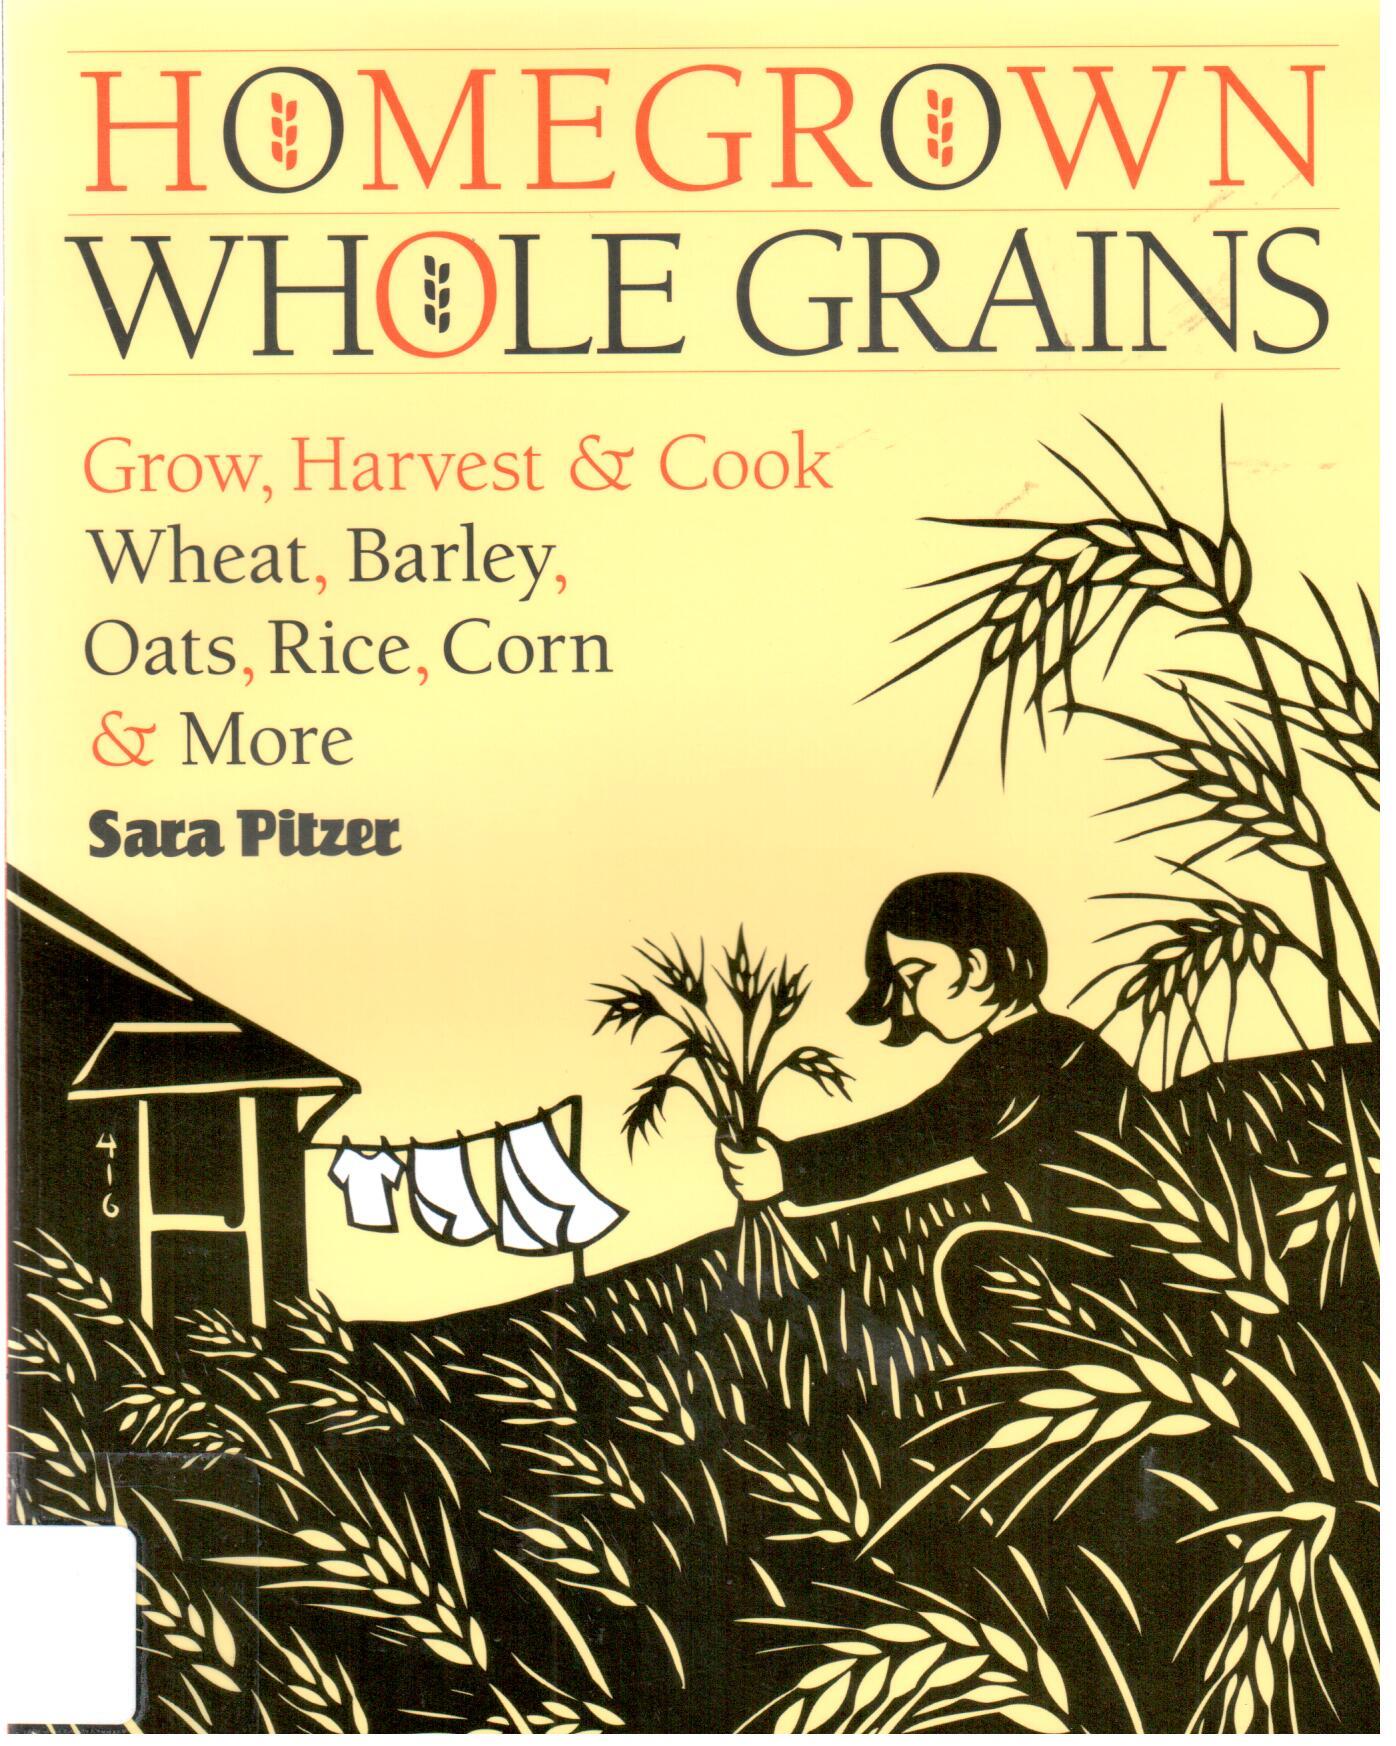 Home grown whole grains